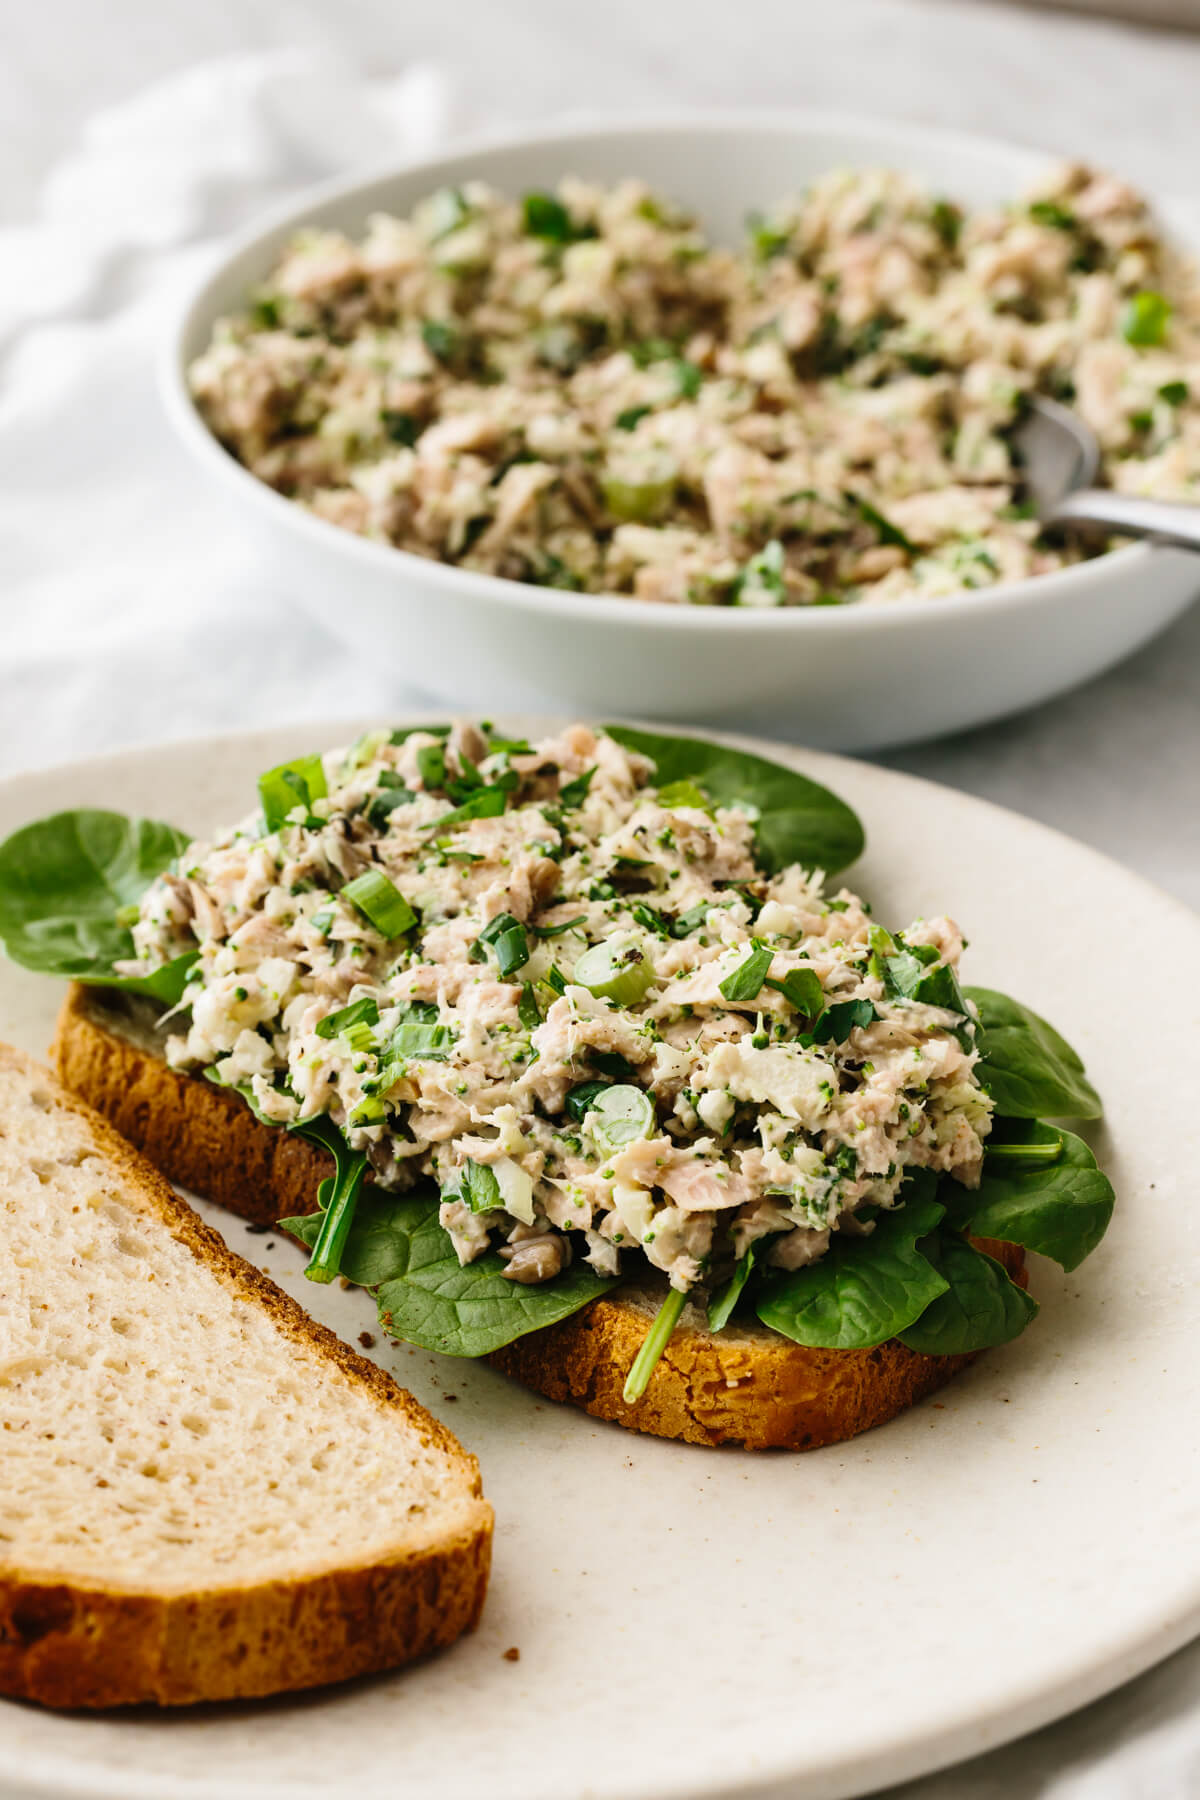 Broccoli tuna salad on bread with lettuce.